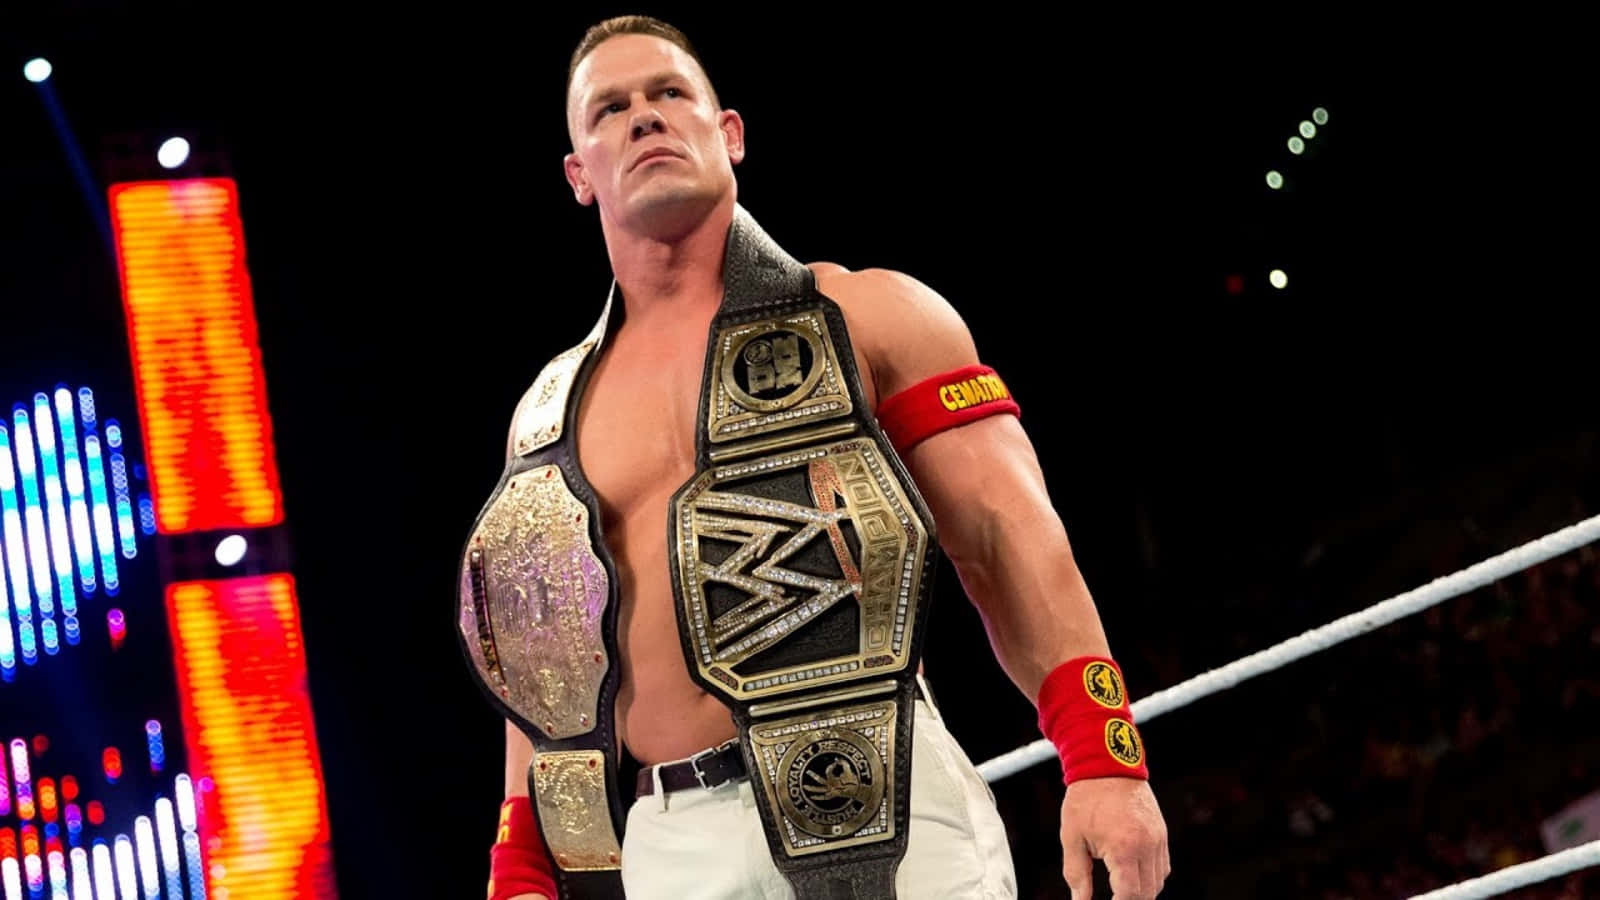 Download WWE Superstar John Cena Salute Pose Wallpaper | Wallpapers.com